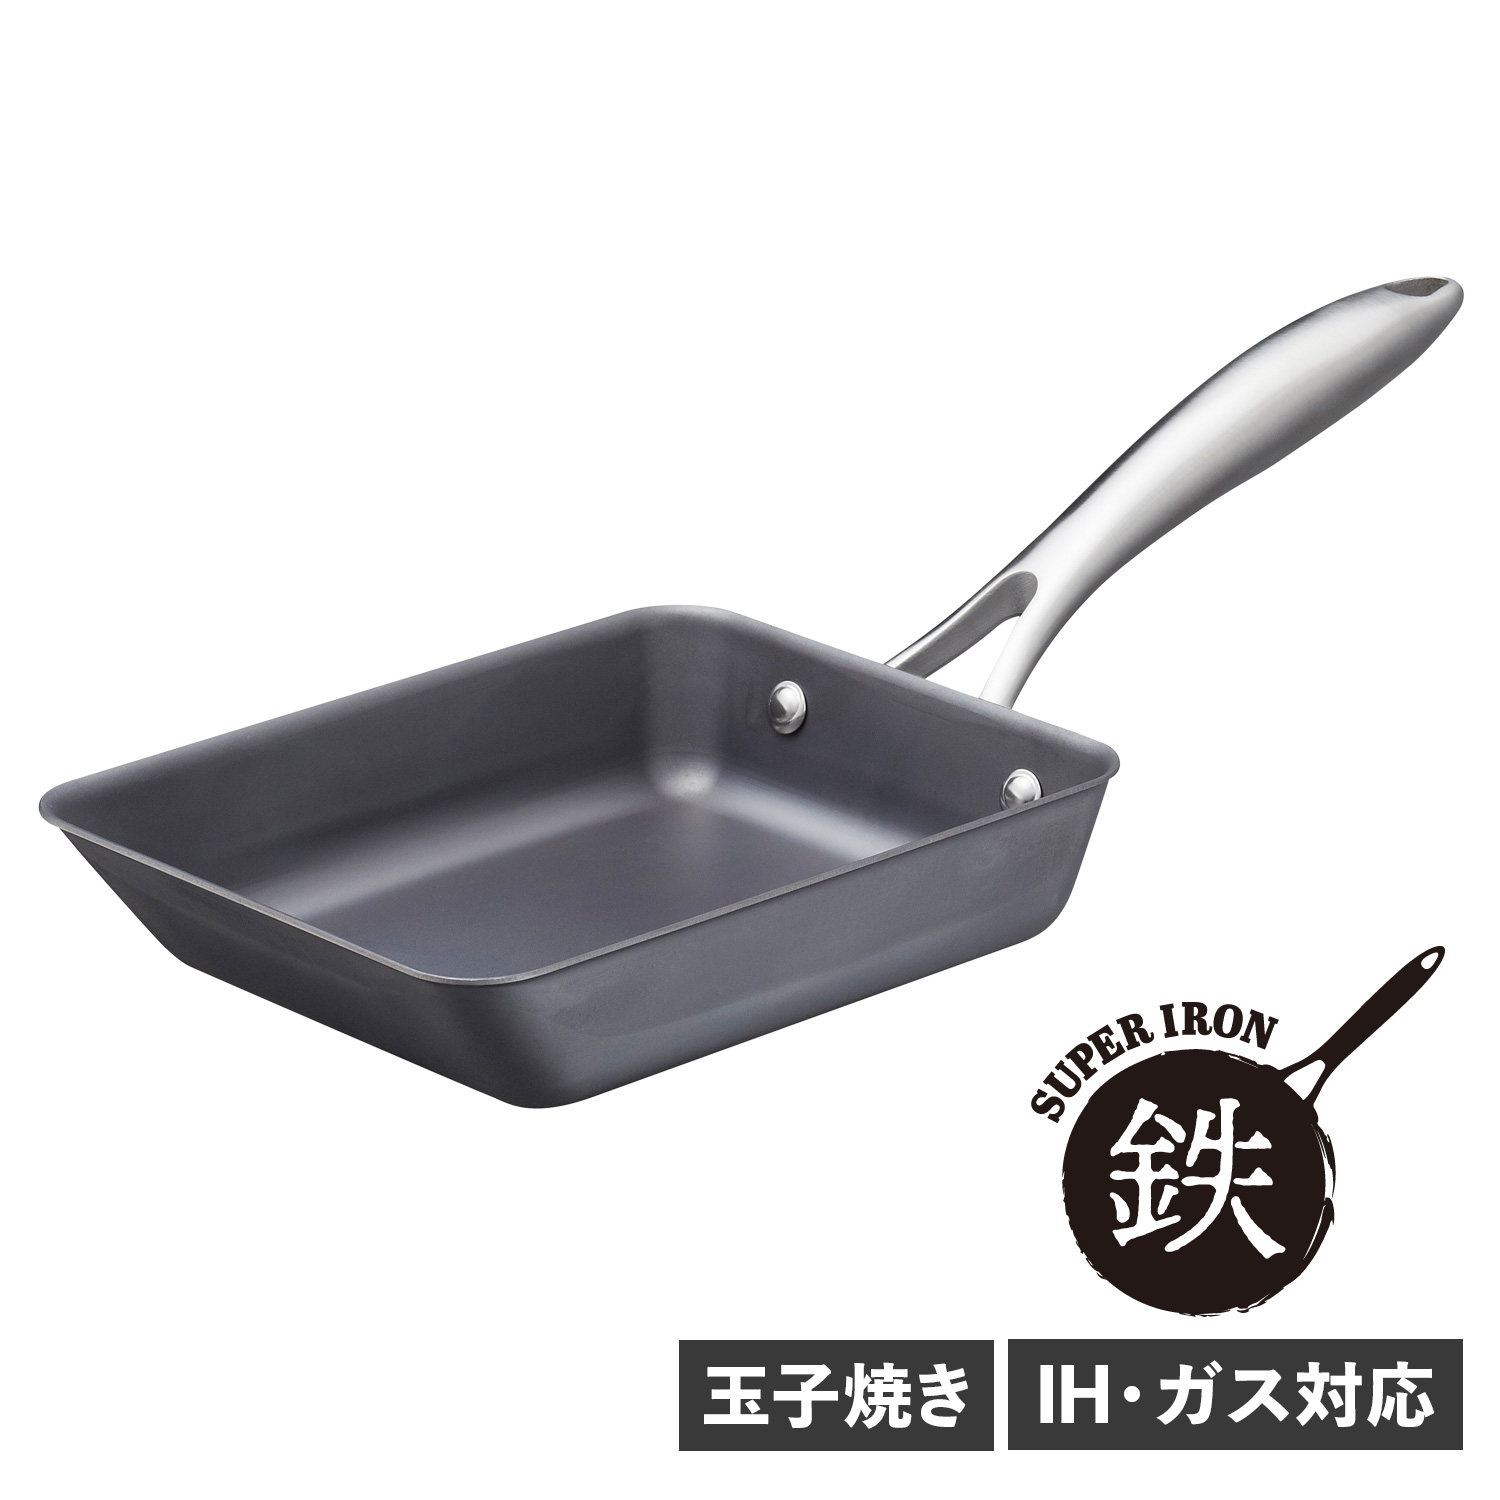 Vita Craft Wok Fry Pan Super Iron 20cm IH Made in Japan Authentic New Kitchen 